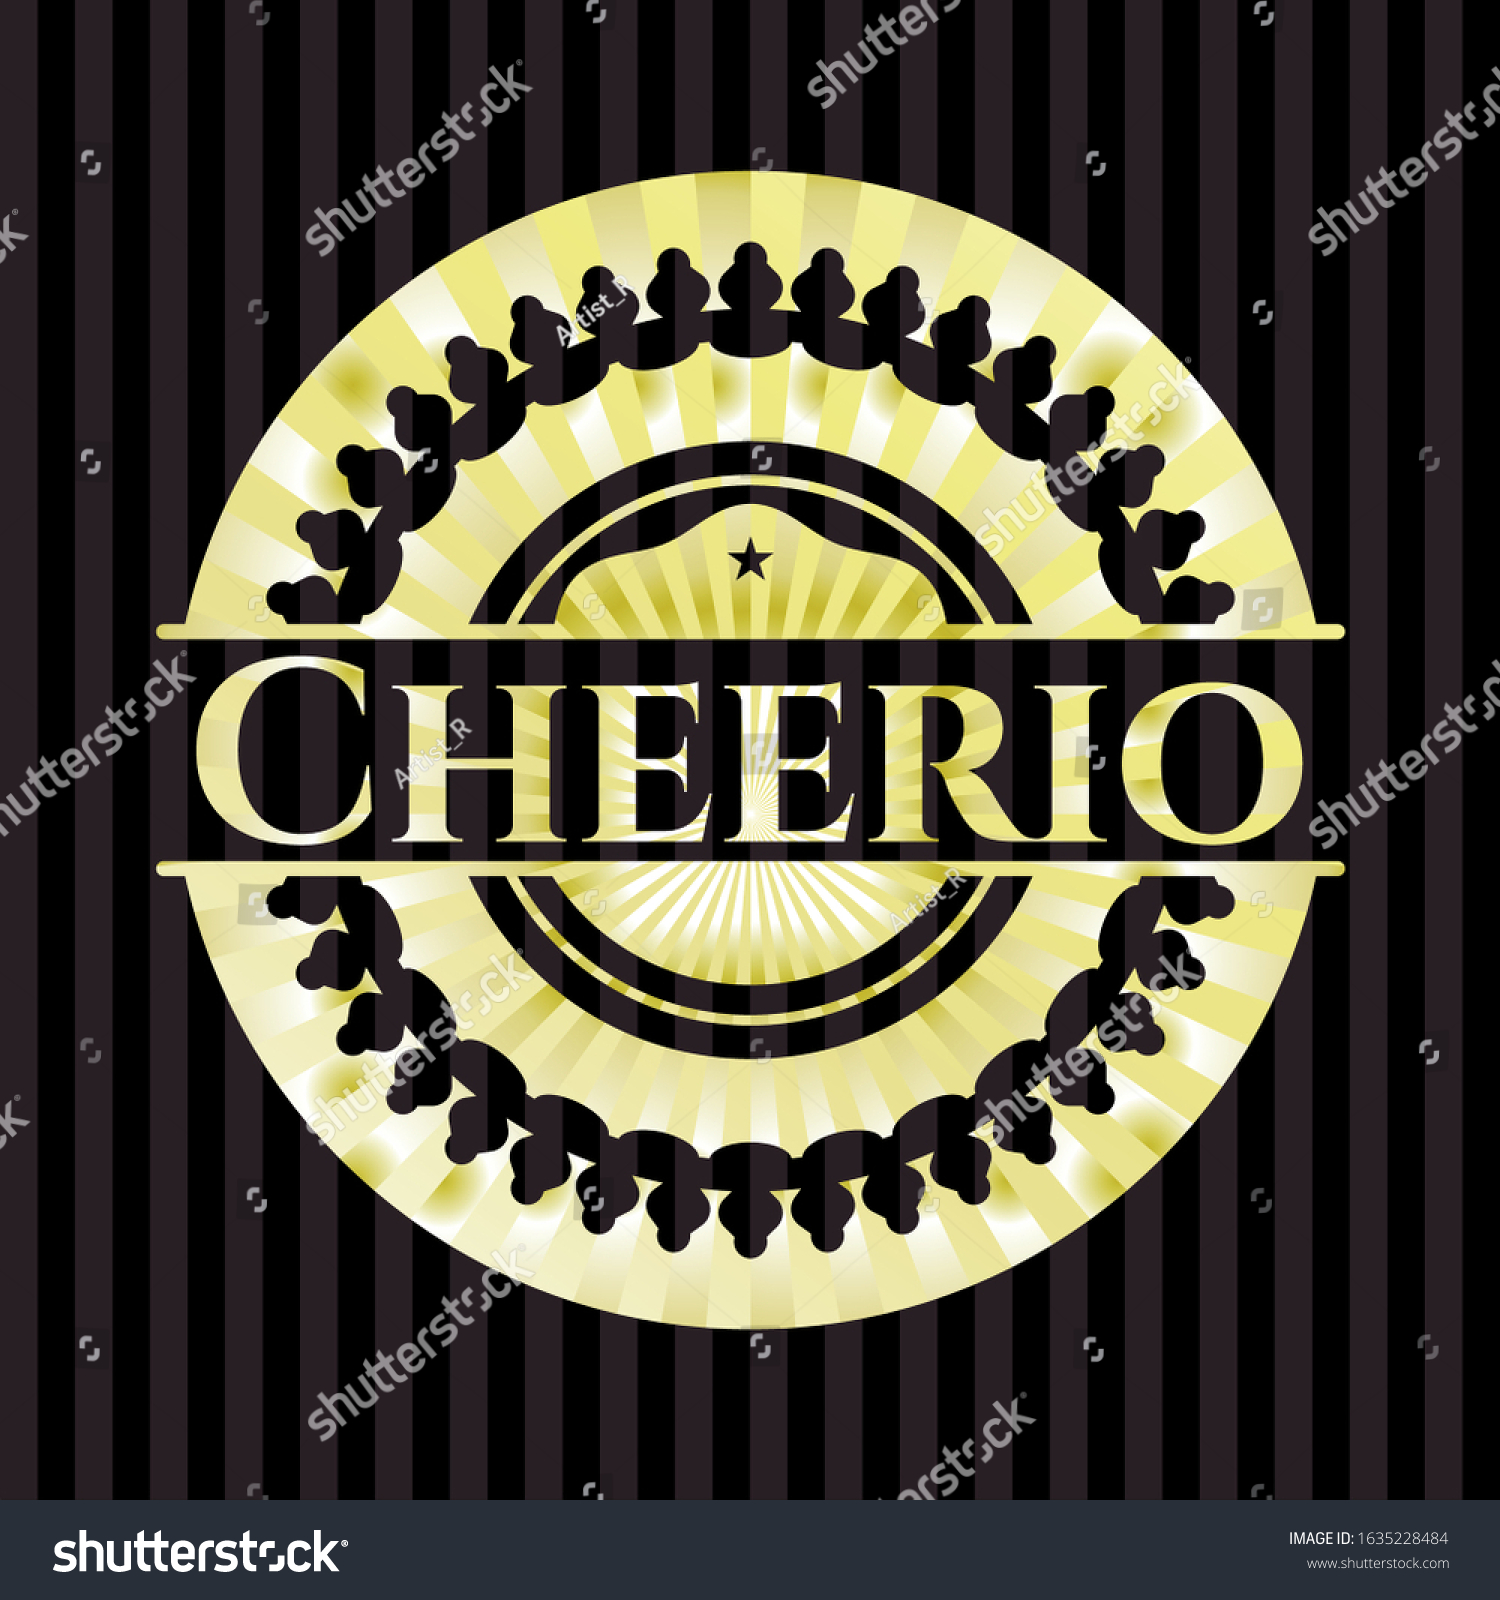 SVG of Cheerio golden badge. Vector Illustration. Detailed. svg